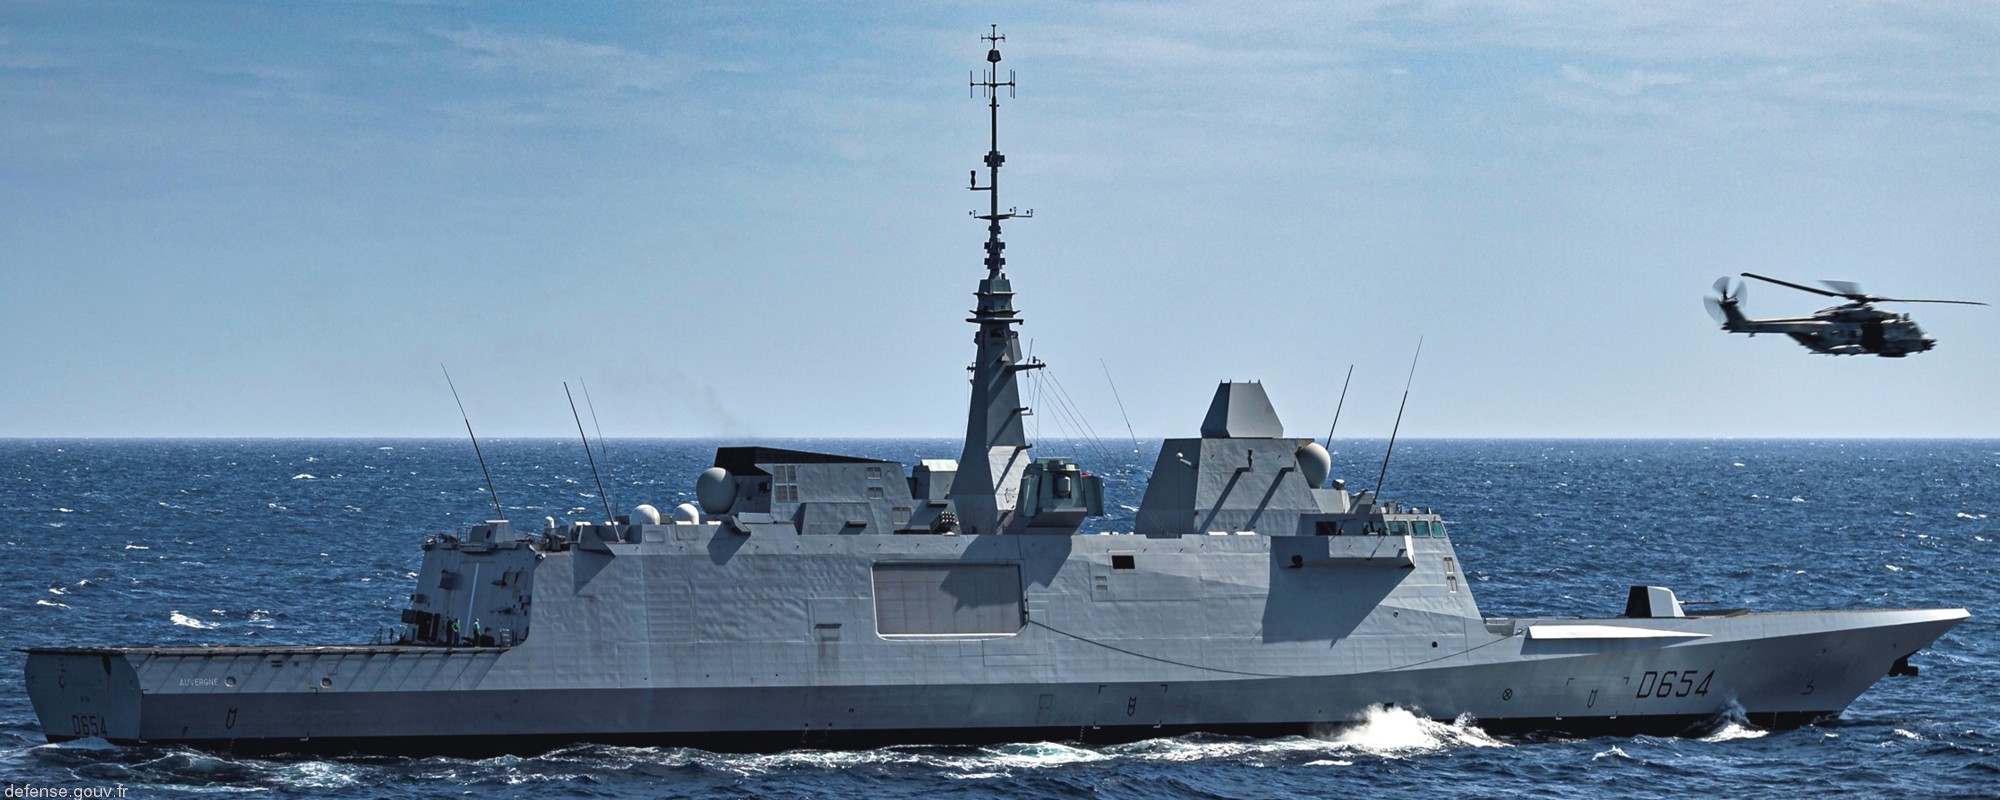 d-654 fs auvergne fremm aquitaine class frigate fregate multi purpose french navy marine nationale 21